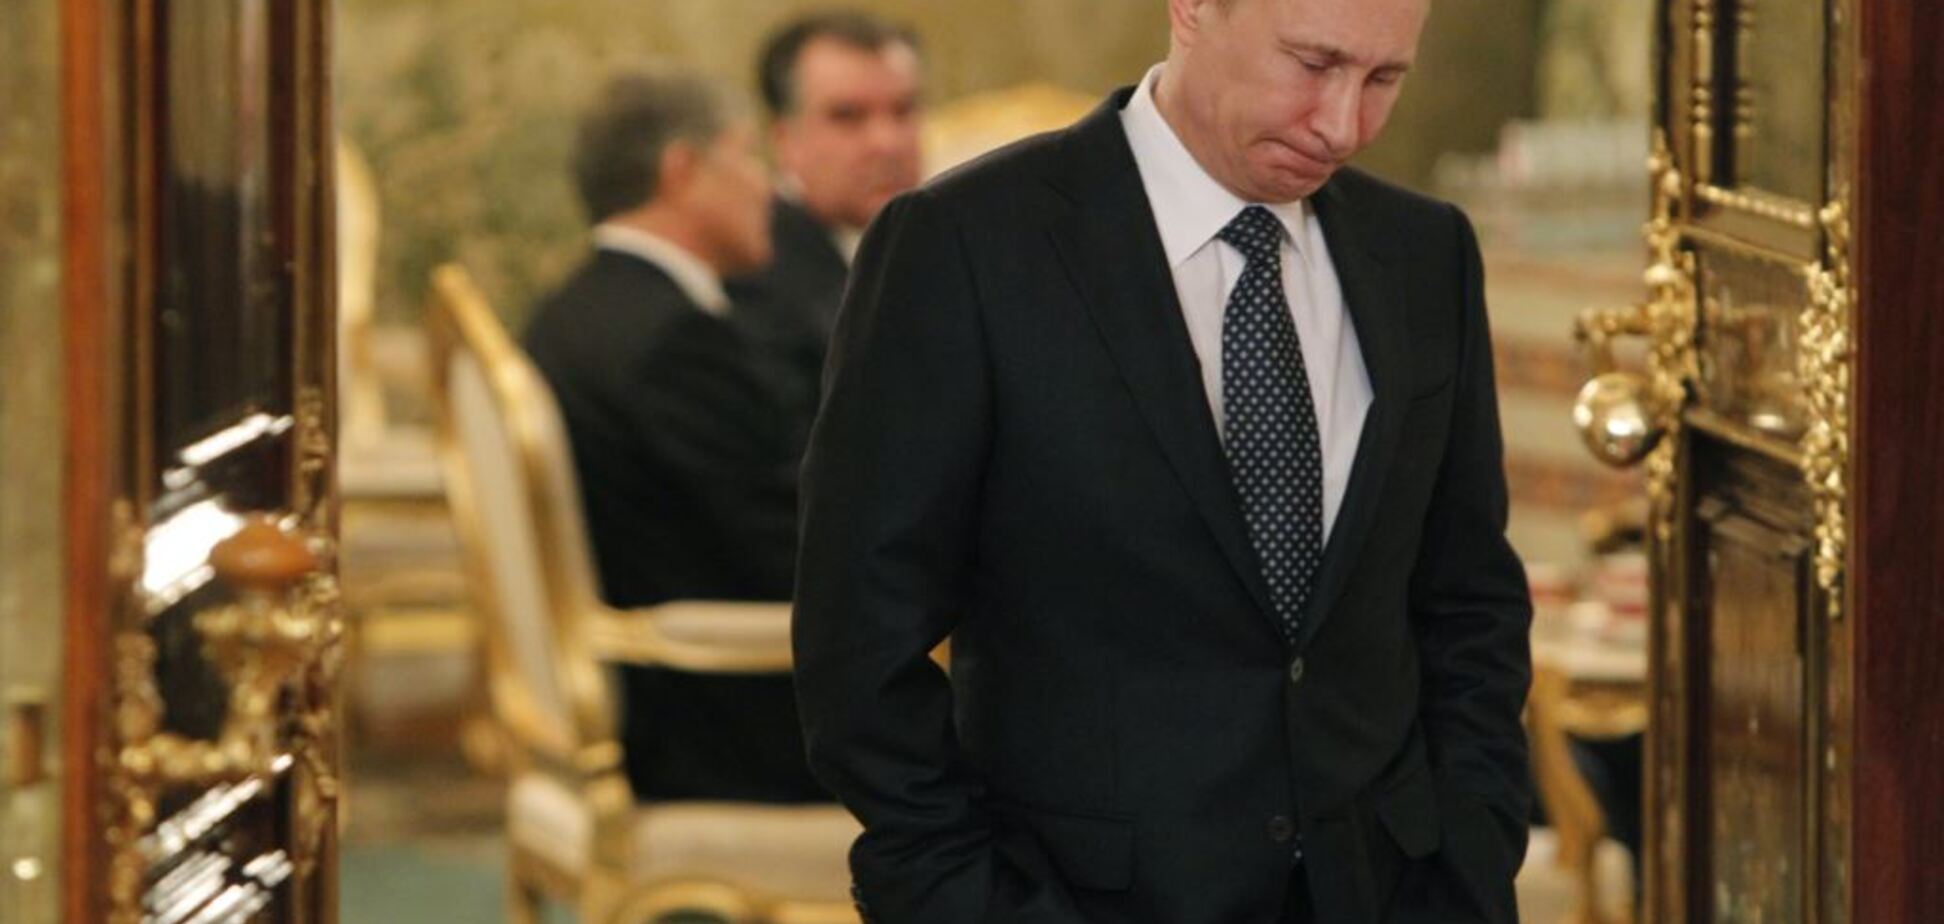 Минимум за 5 лет: рейтинги Путина и Медведева рекордно обвалились, названа причина